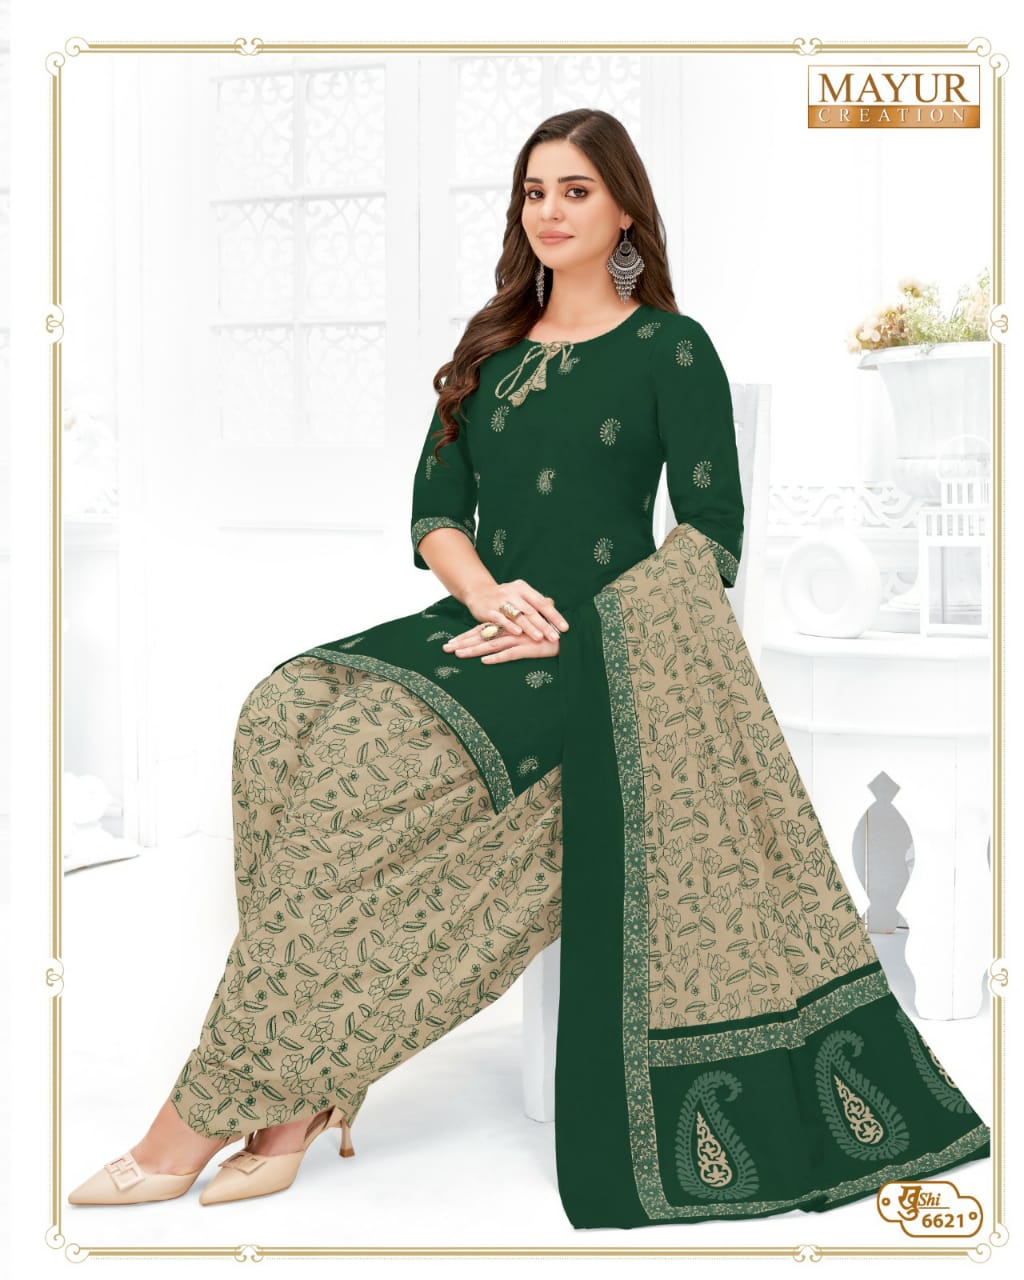 Khushi Vol 66 Mayur Creation Cotton Dress Material Manufacturer Wholesaler